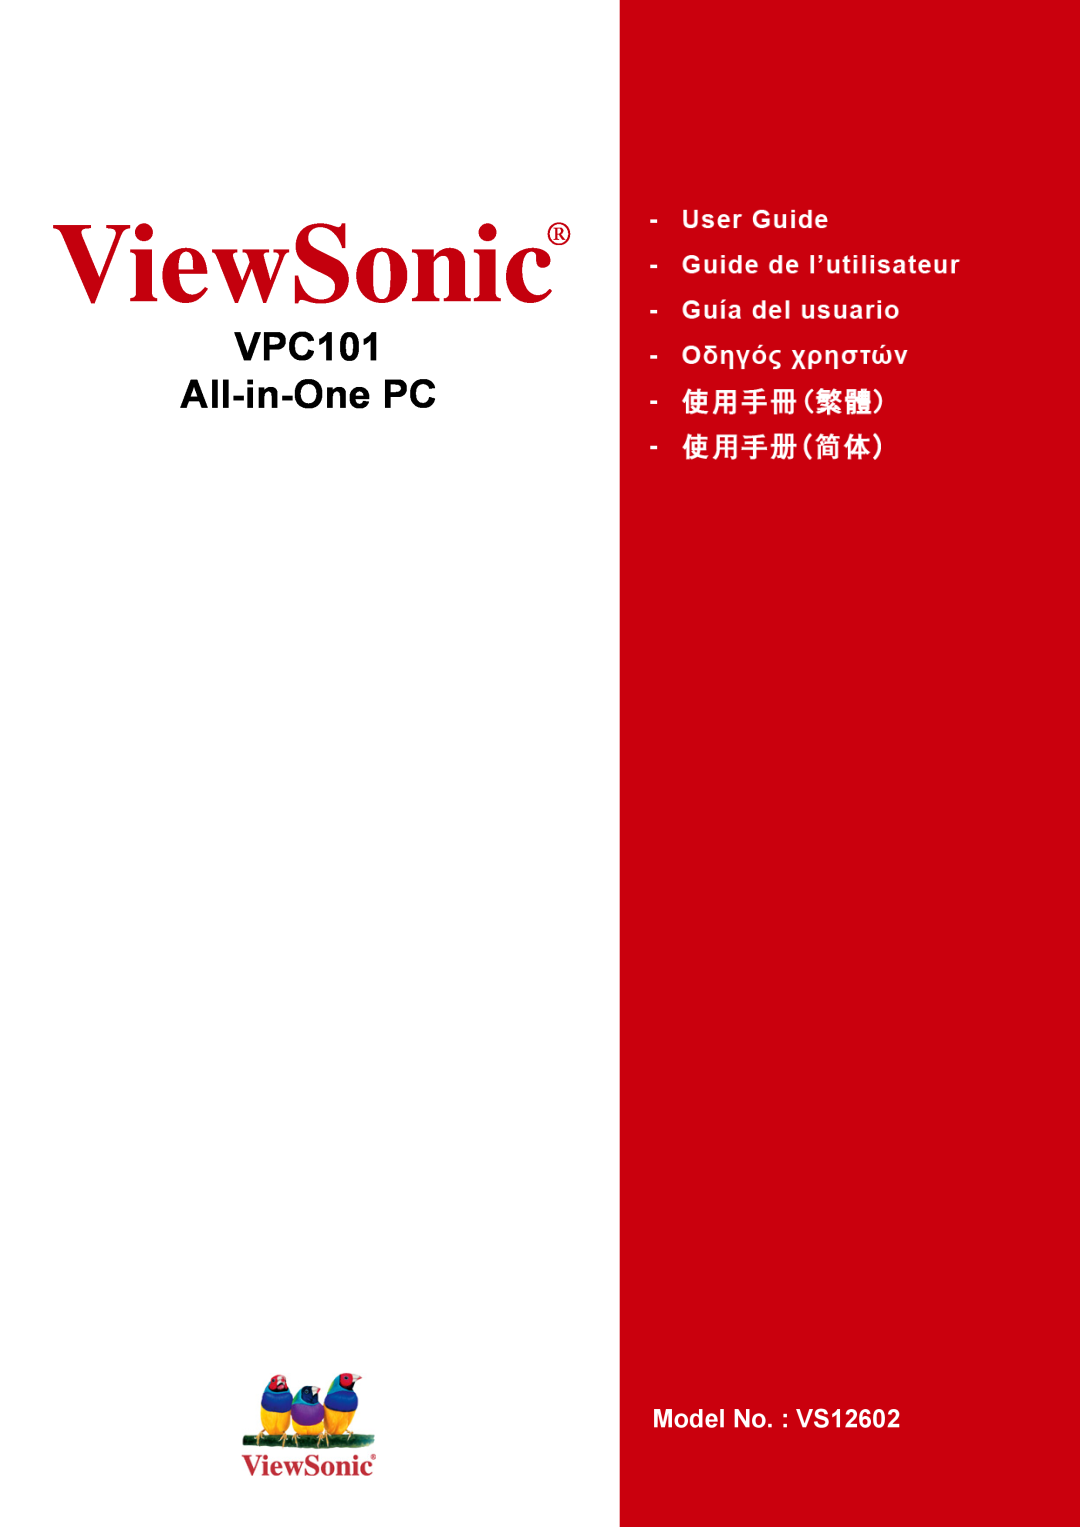 ViewSonic manual ViewSonic, VPC101 All-in-One PC, Model No. VS12602 